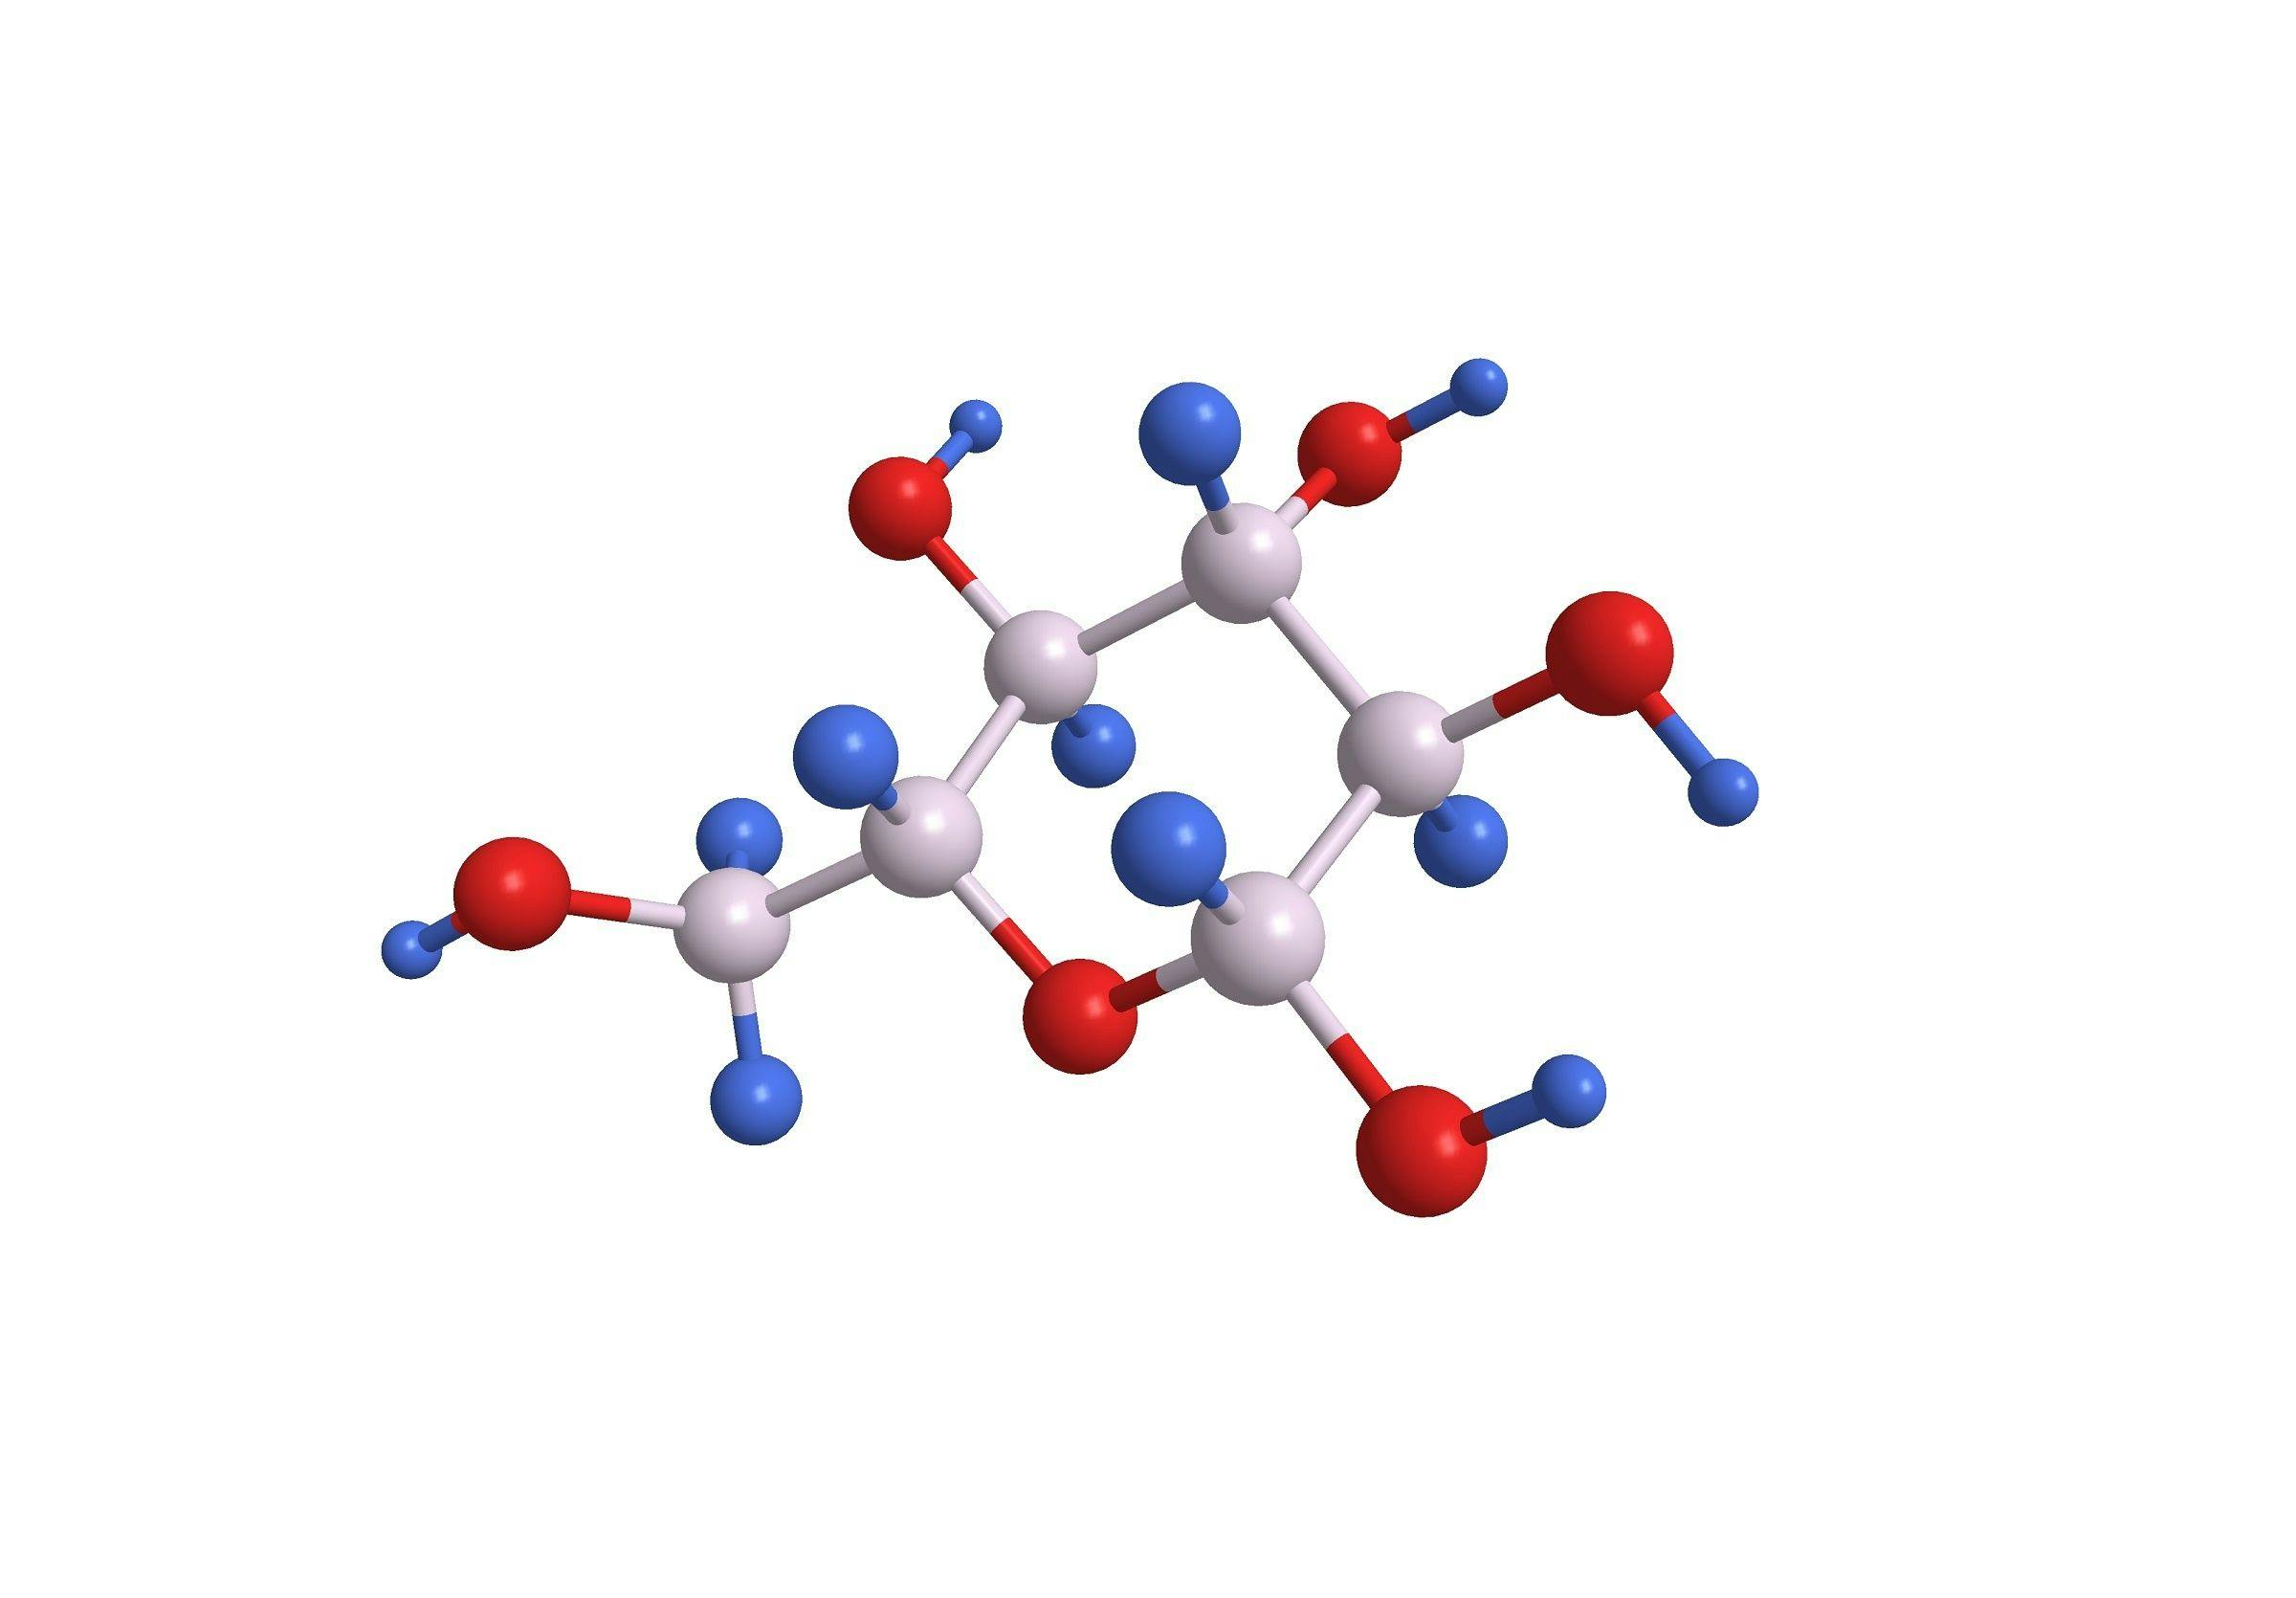 Molecular structure of glucose | Image Credit: © raimund14 - stock.adobe.com